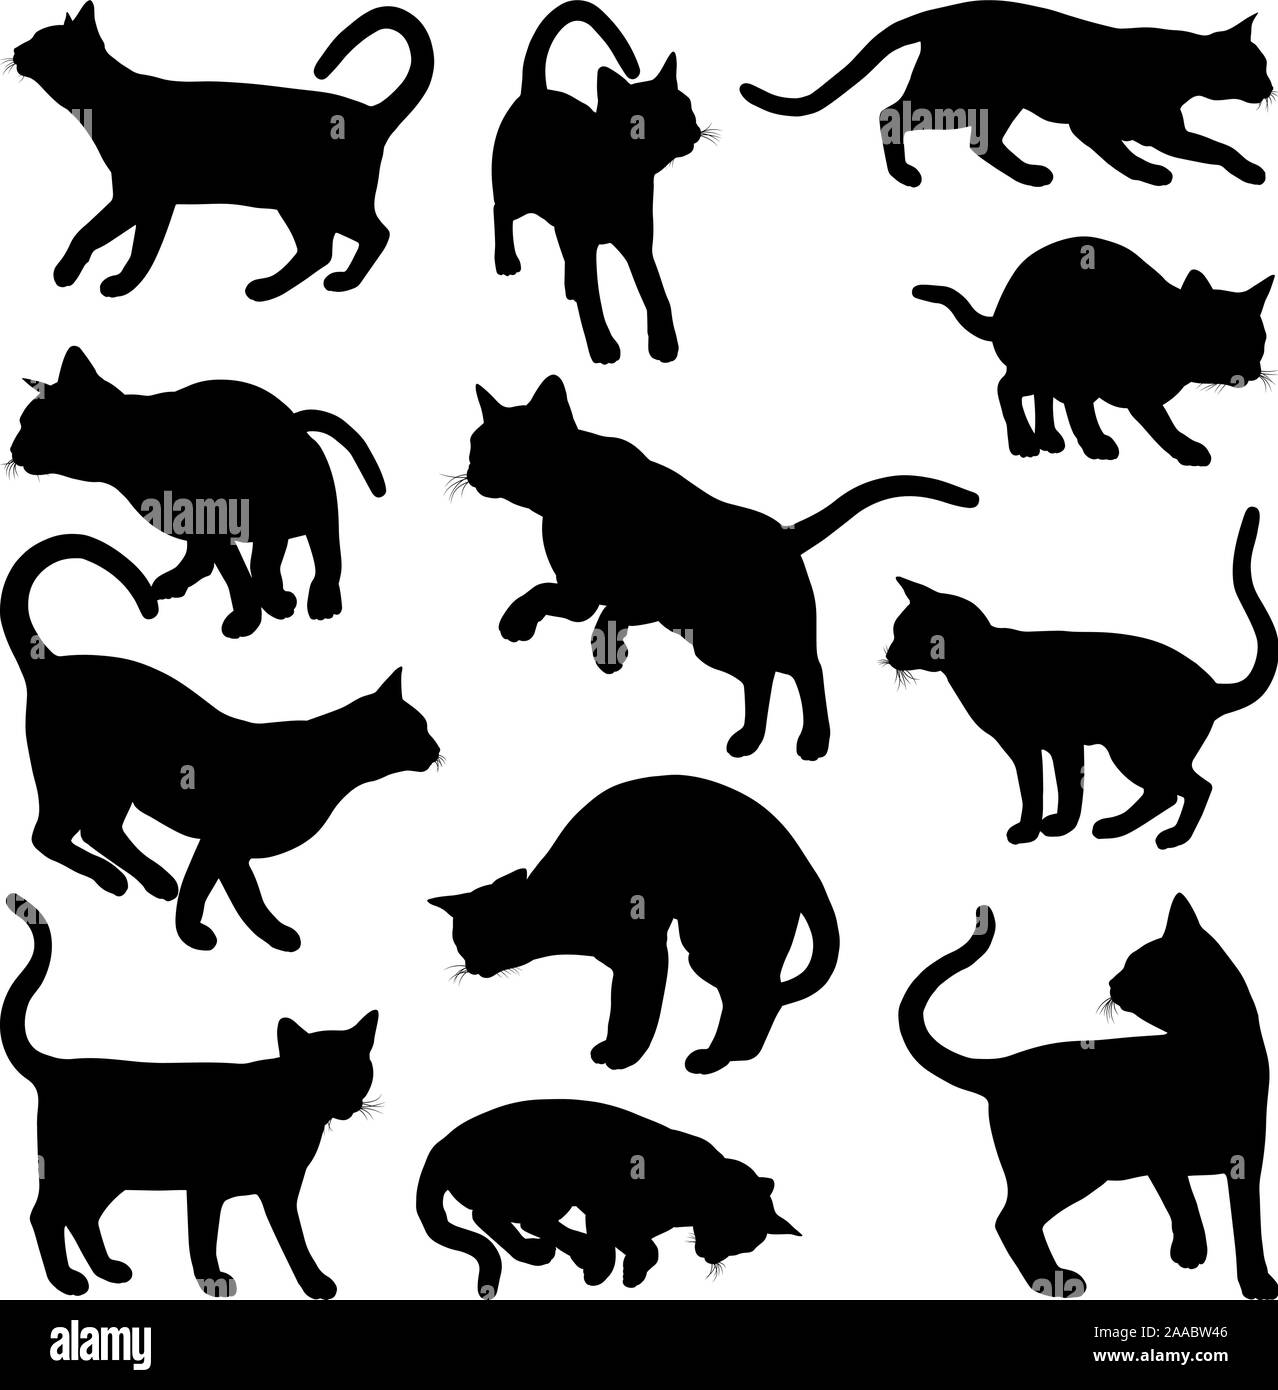 Cat Silhouette Pet Animals Set Stock Vector